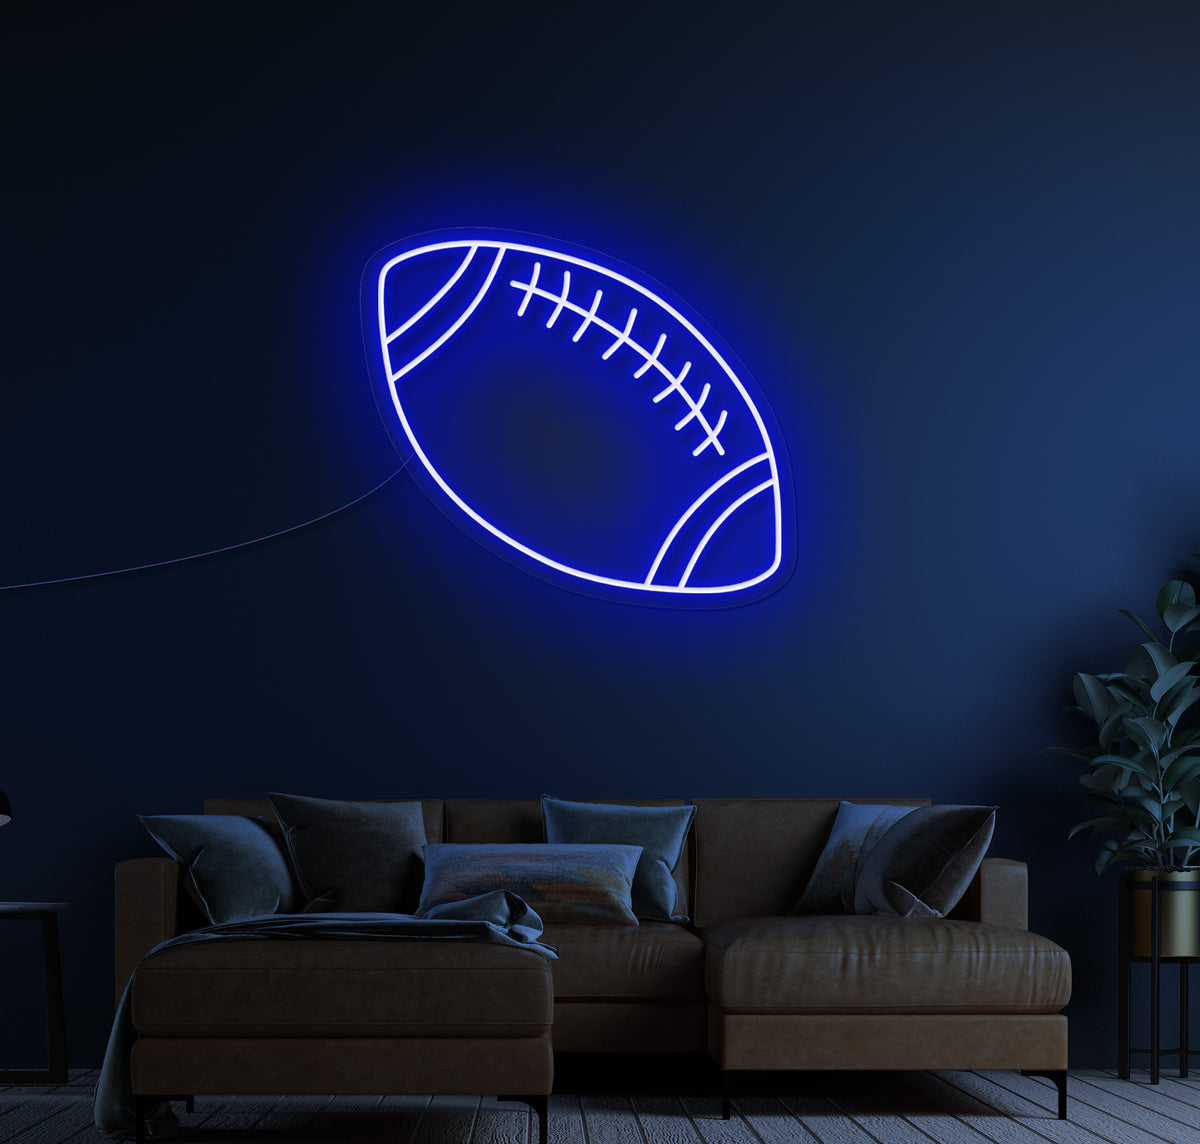 American Football LED Neon Sign